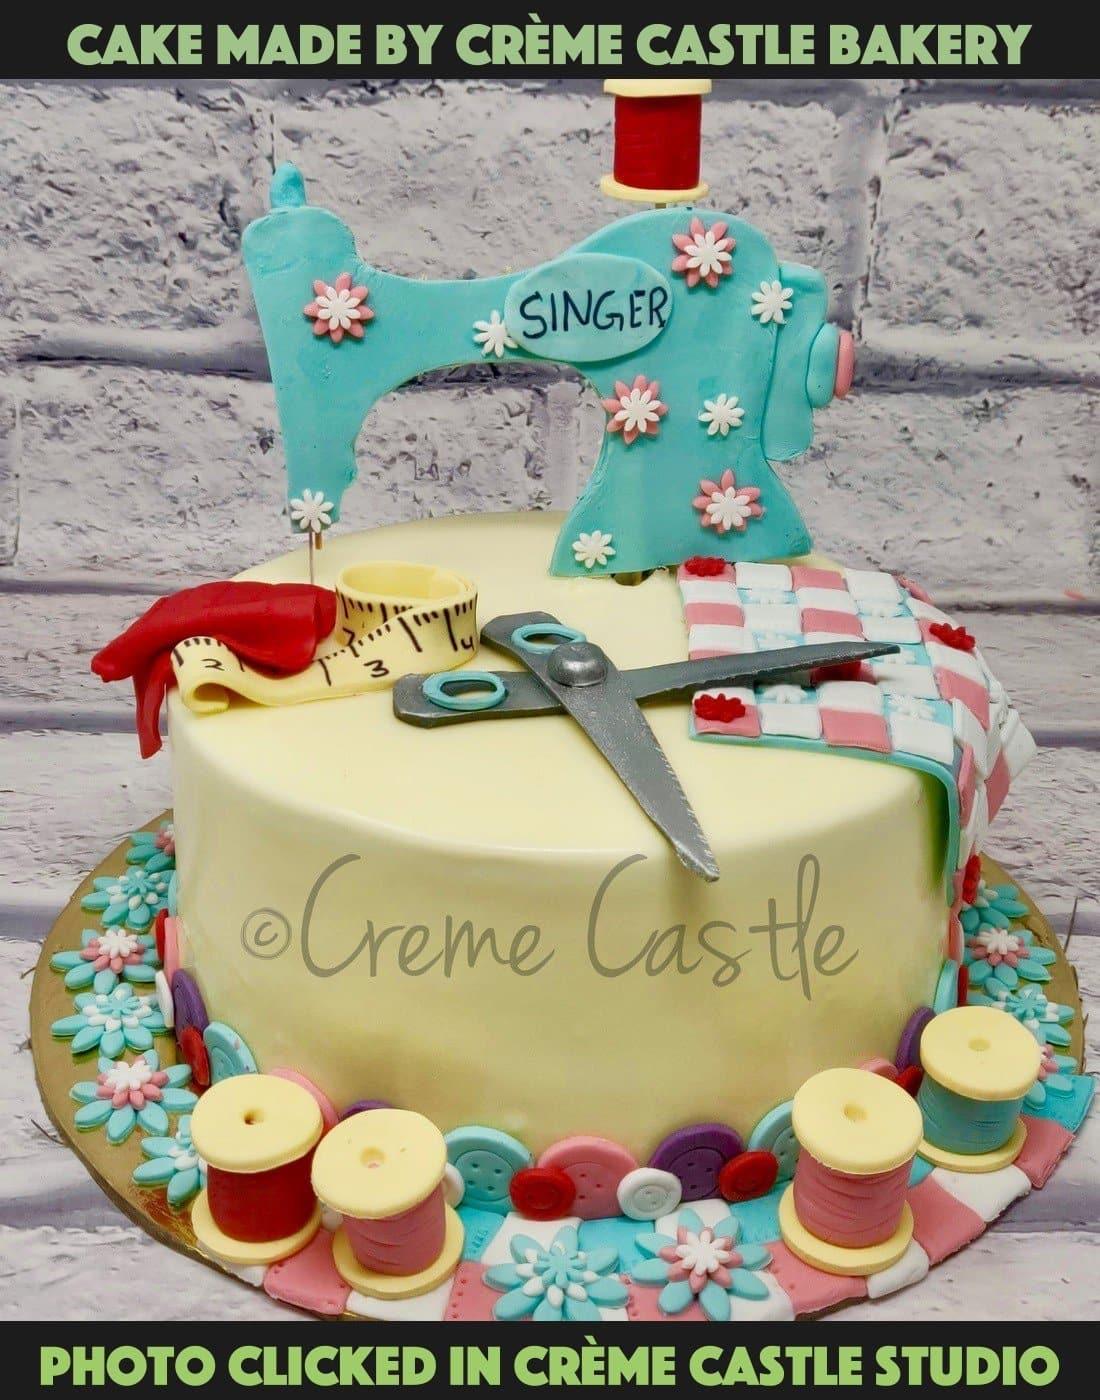 Wedding Cakes - Amazing cakes Irish wedding cakes based in Dublin Ireland  Wedding cakes, Birthday,Creative Cakes,Bake My Cake, Christening Cakes,  Corporate, Novelty Cakes, and cakes for all occasions!